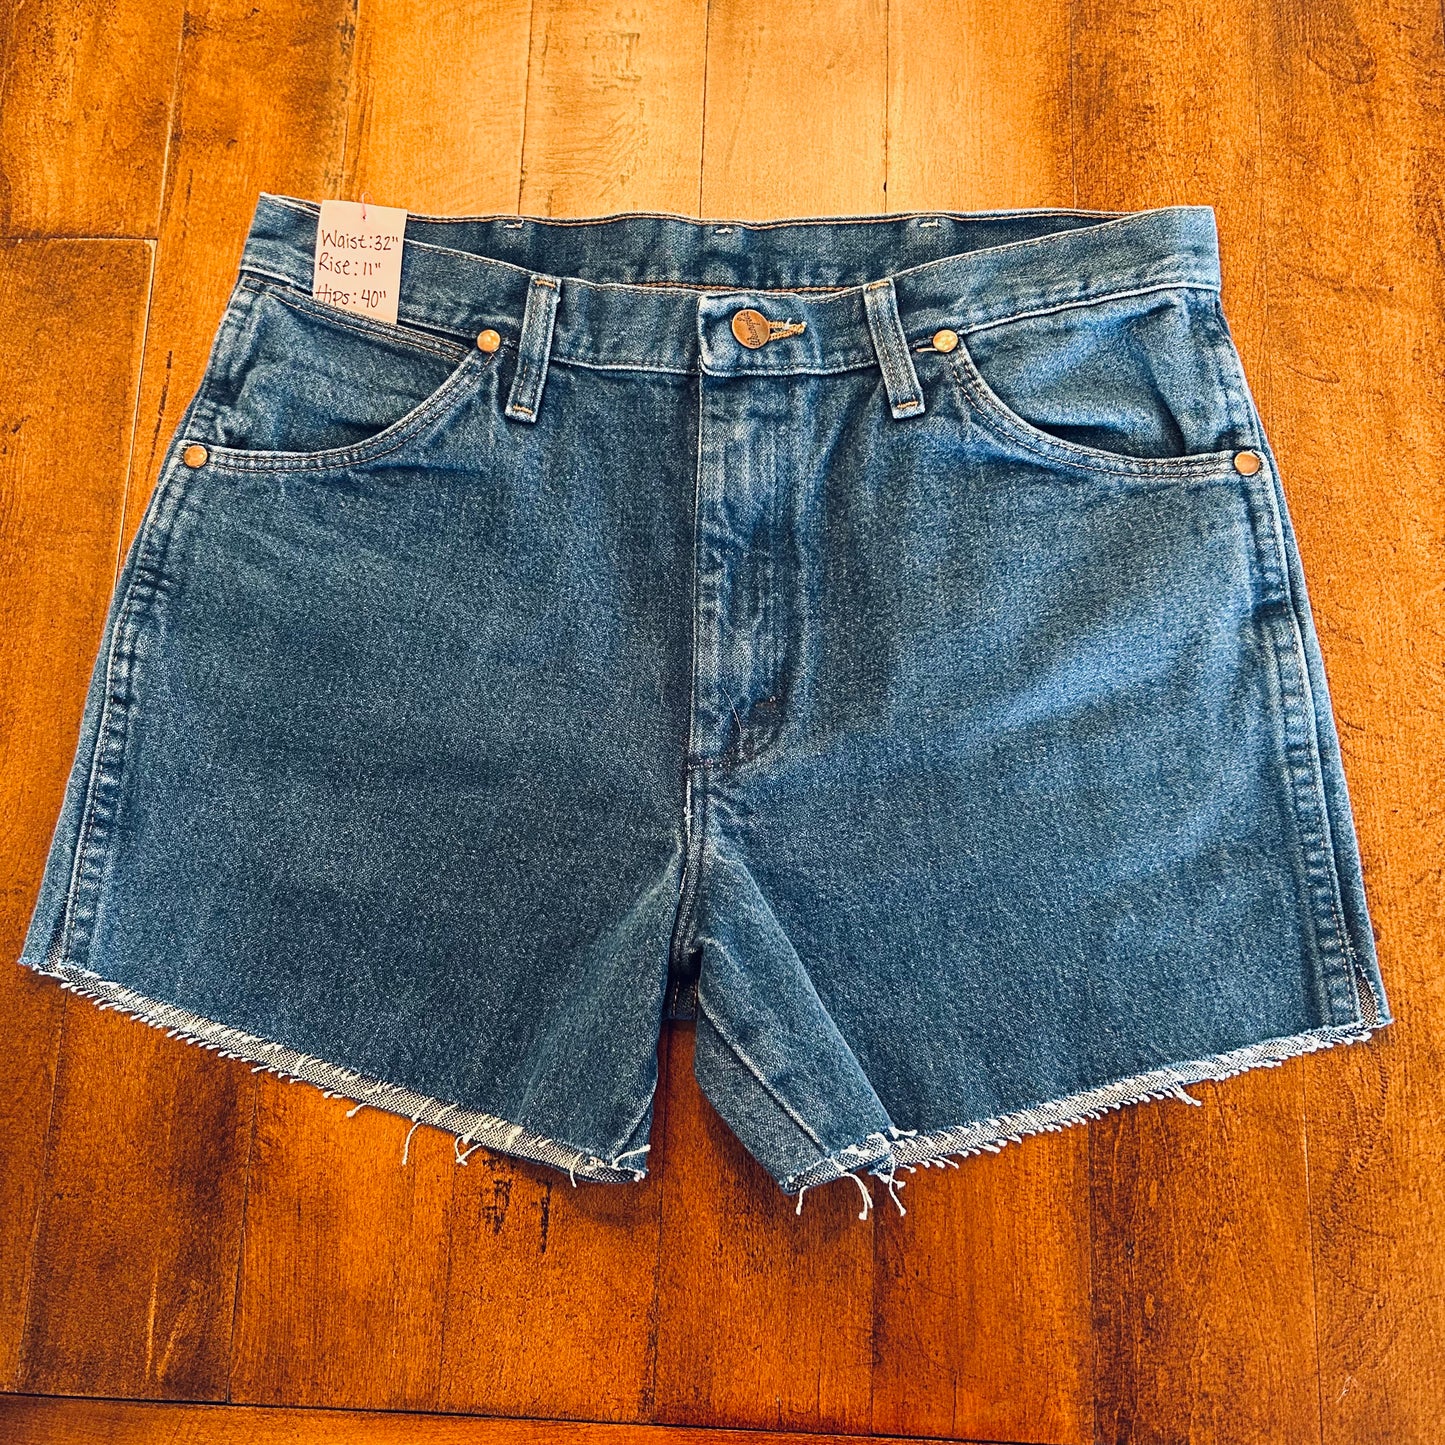 Wrangler Cowboy Cut Jean Shorts Size 32